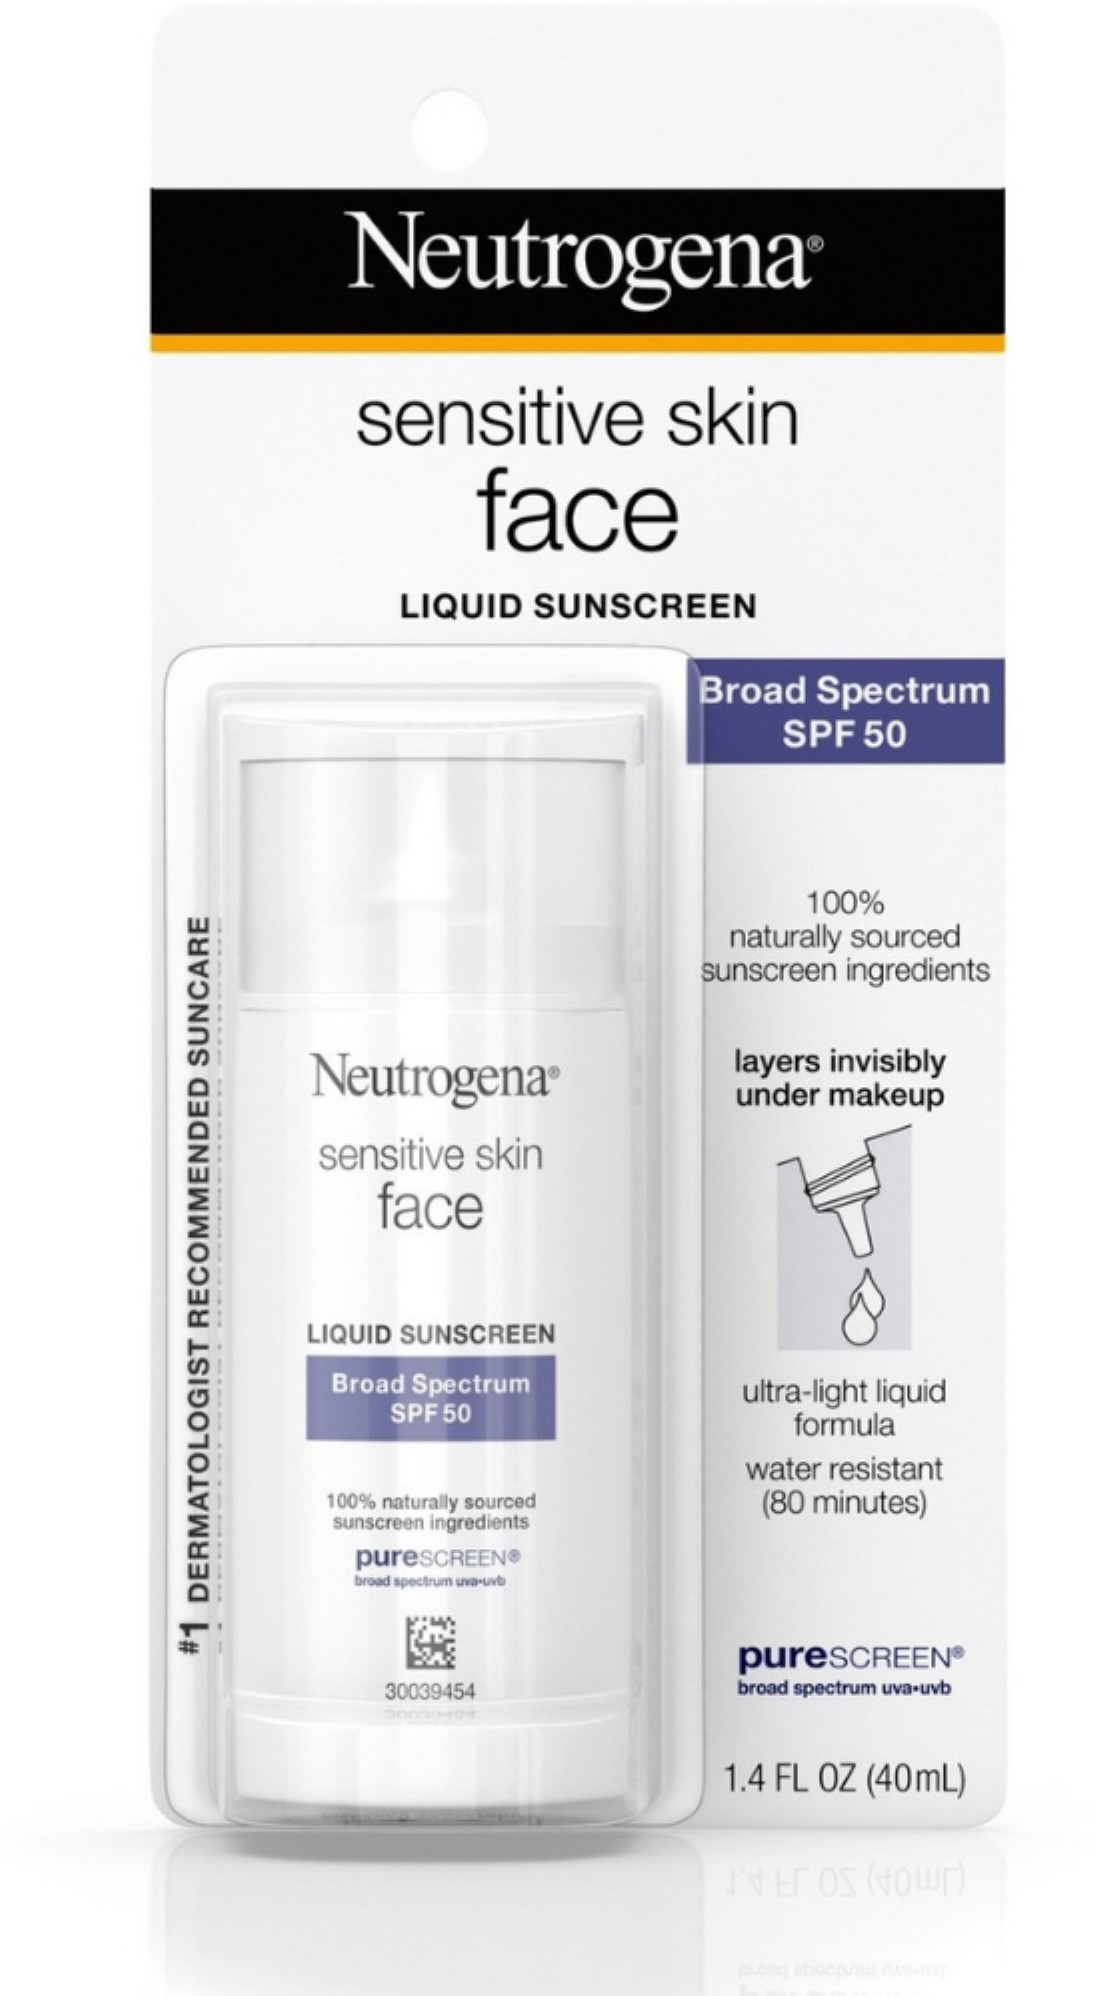 Neutrogena Sensitive Skin Face Liquid Sunscreen SPF 50, 1.4 oz - image 1 of 1